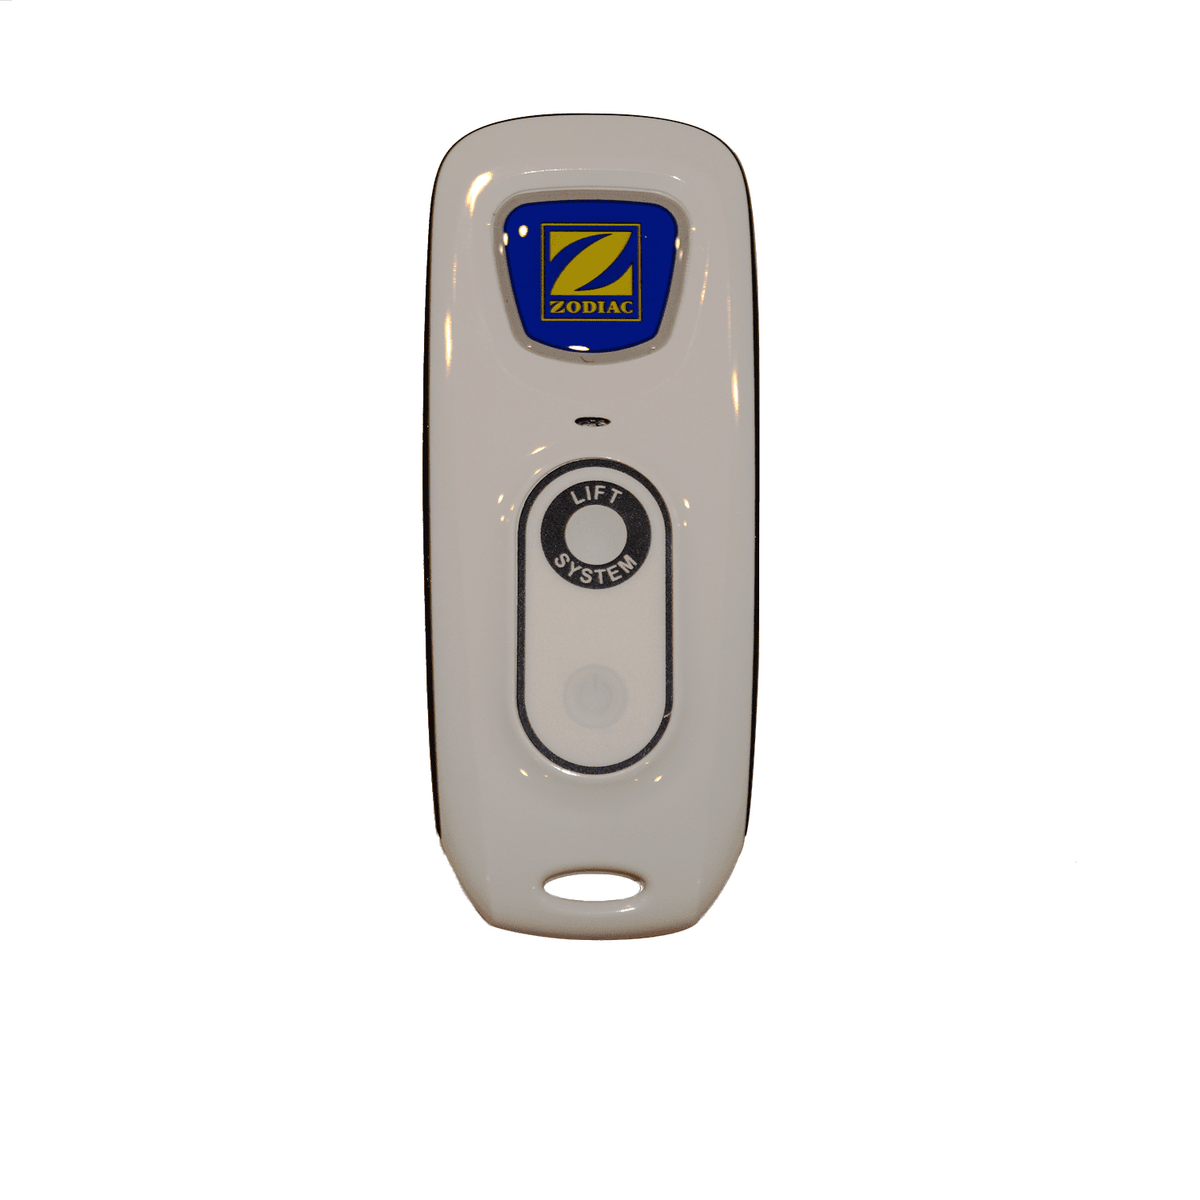 Zodaic VX55 Remote Control - R0548400: Convenient and reliable remote